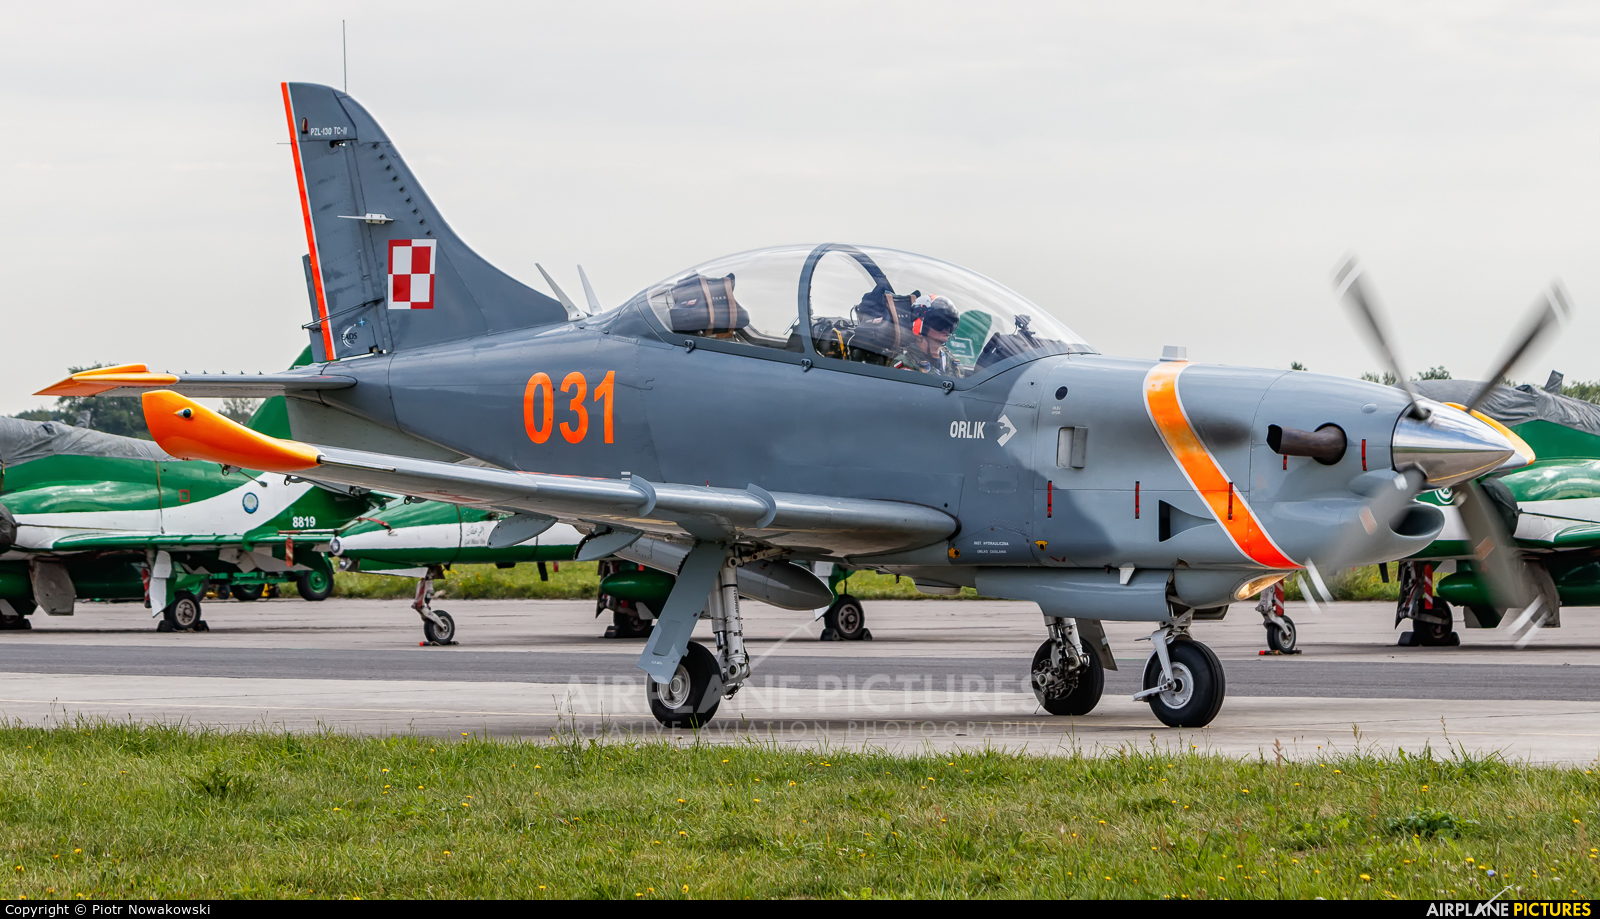 Poland - Air Force "Orlik Acrobatic Group" 031 aircraft at Gdynia- Babie Doły (Oksywie)